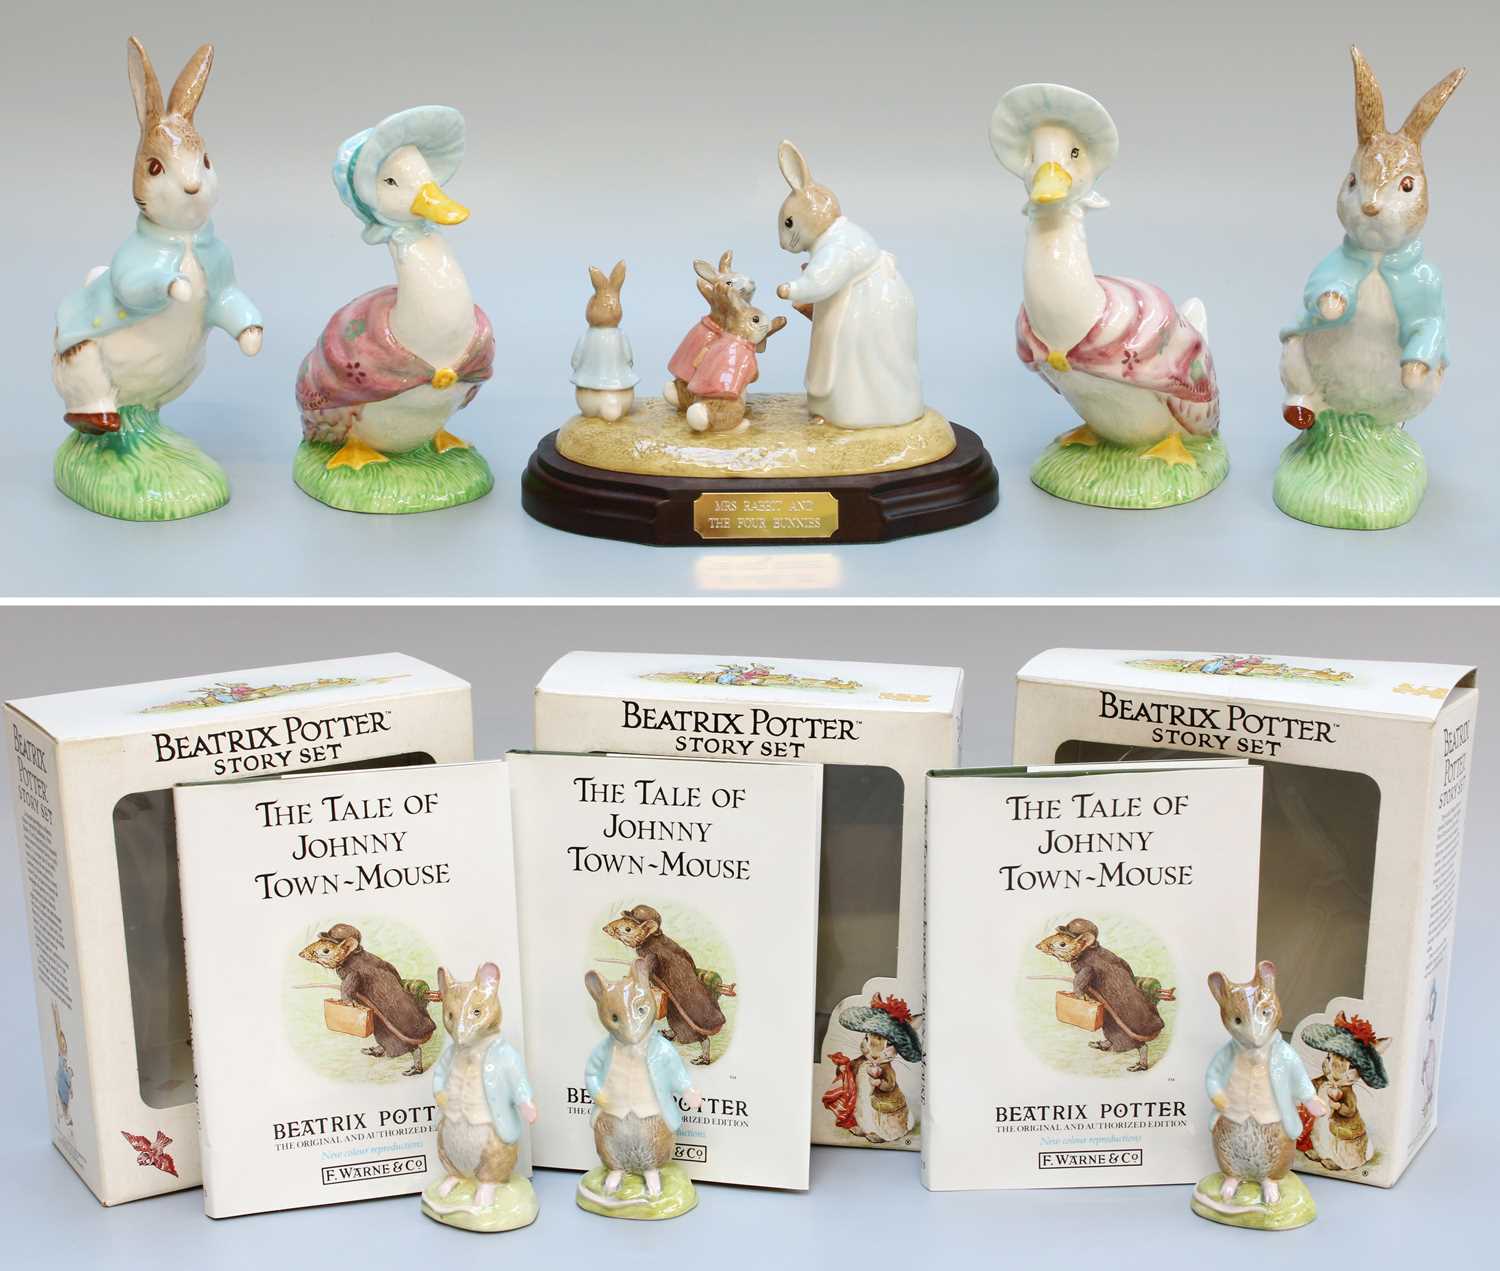 Royal Albert Beatrix Potter Figures, all large size including 'Peter Rabbit', 'Jemima Puddleduck'